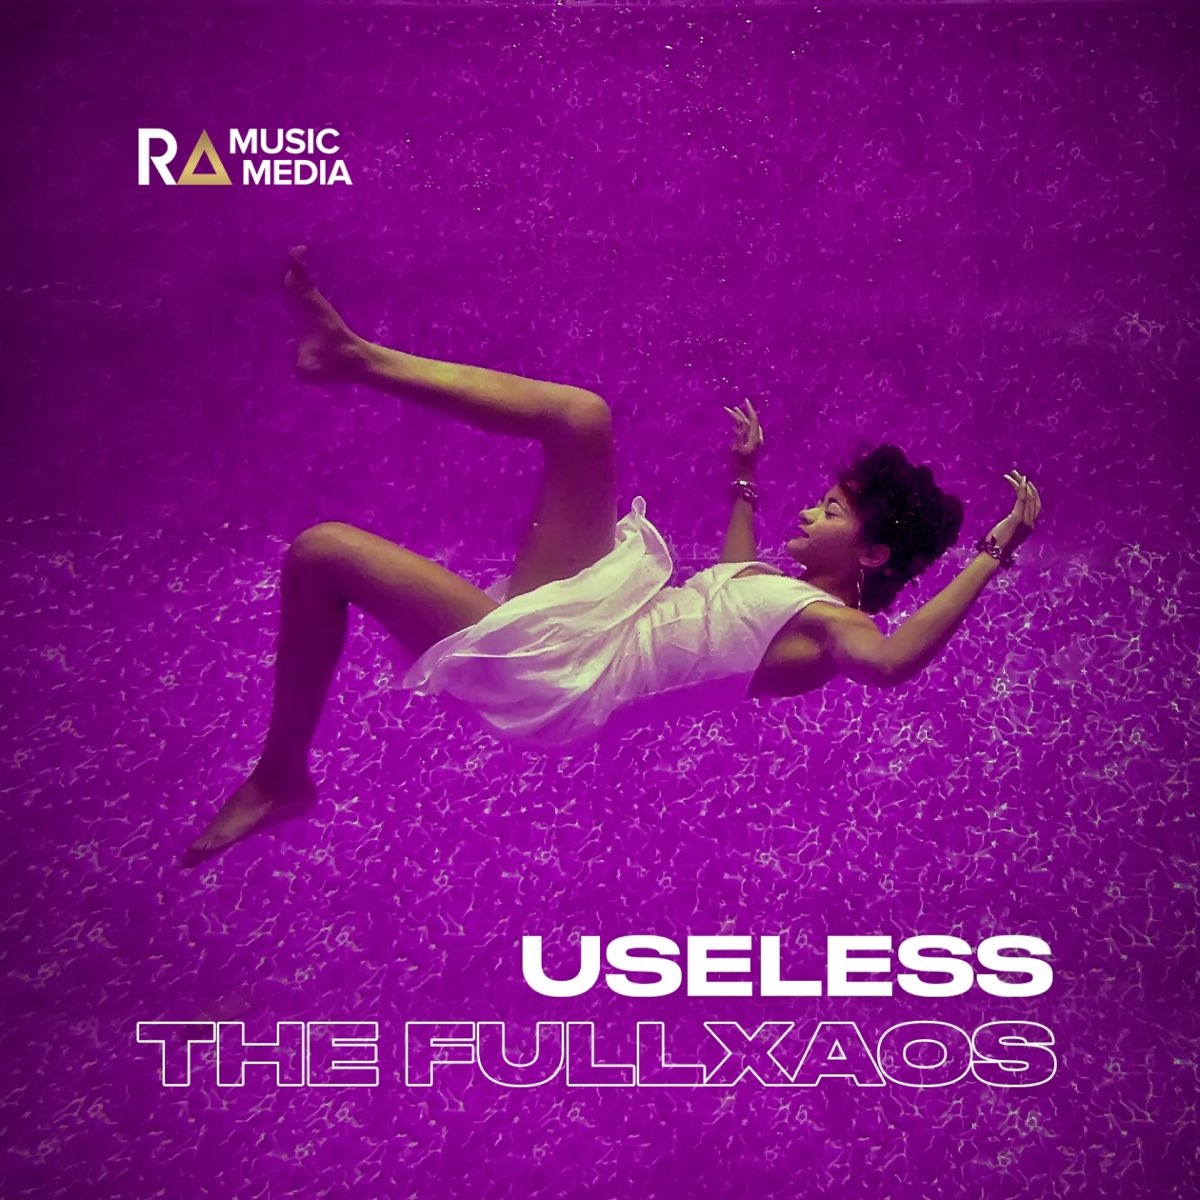 Обложка альбома useless. Бесполезно альбом. The FULLXAOS - Cruzin. Песня useless. Музыку бесполезно